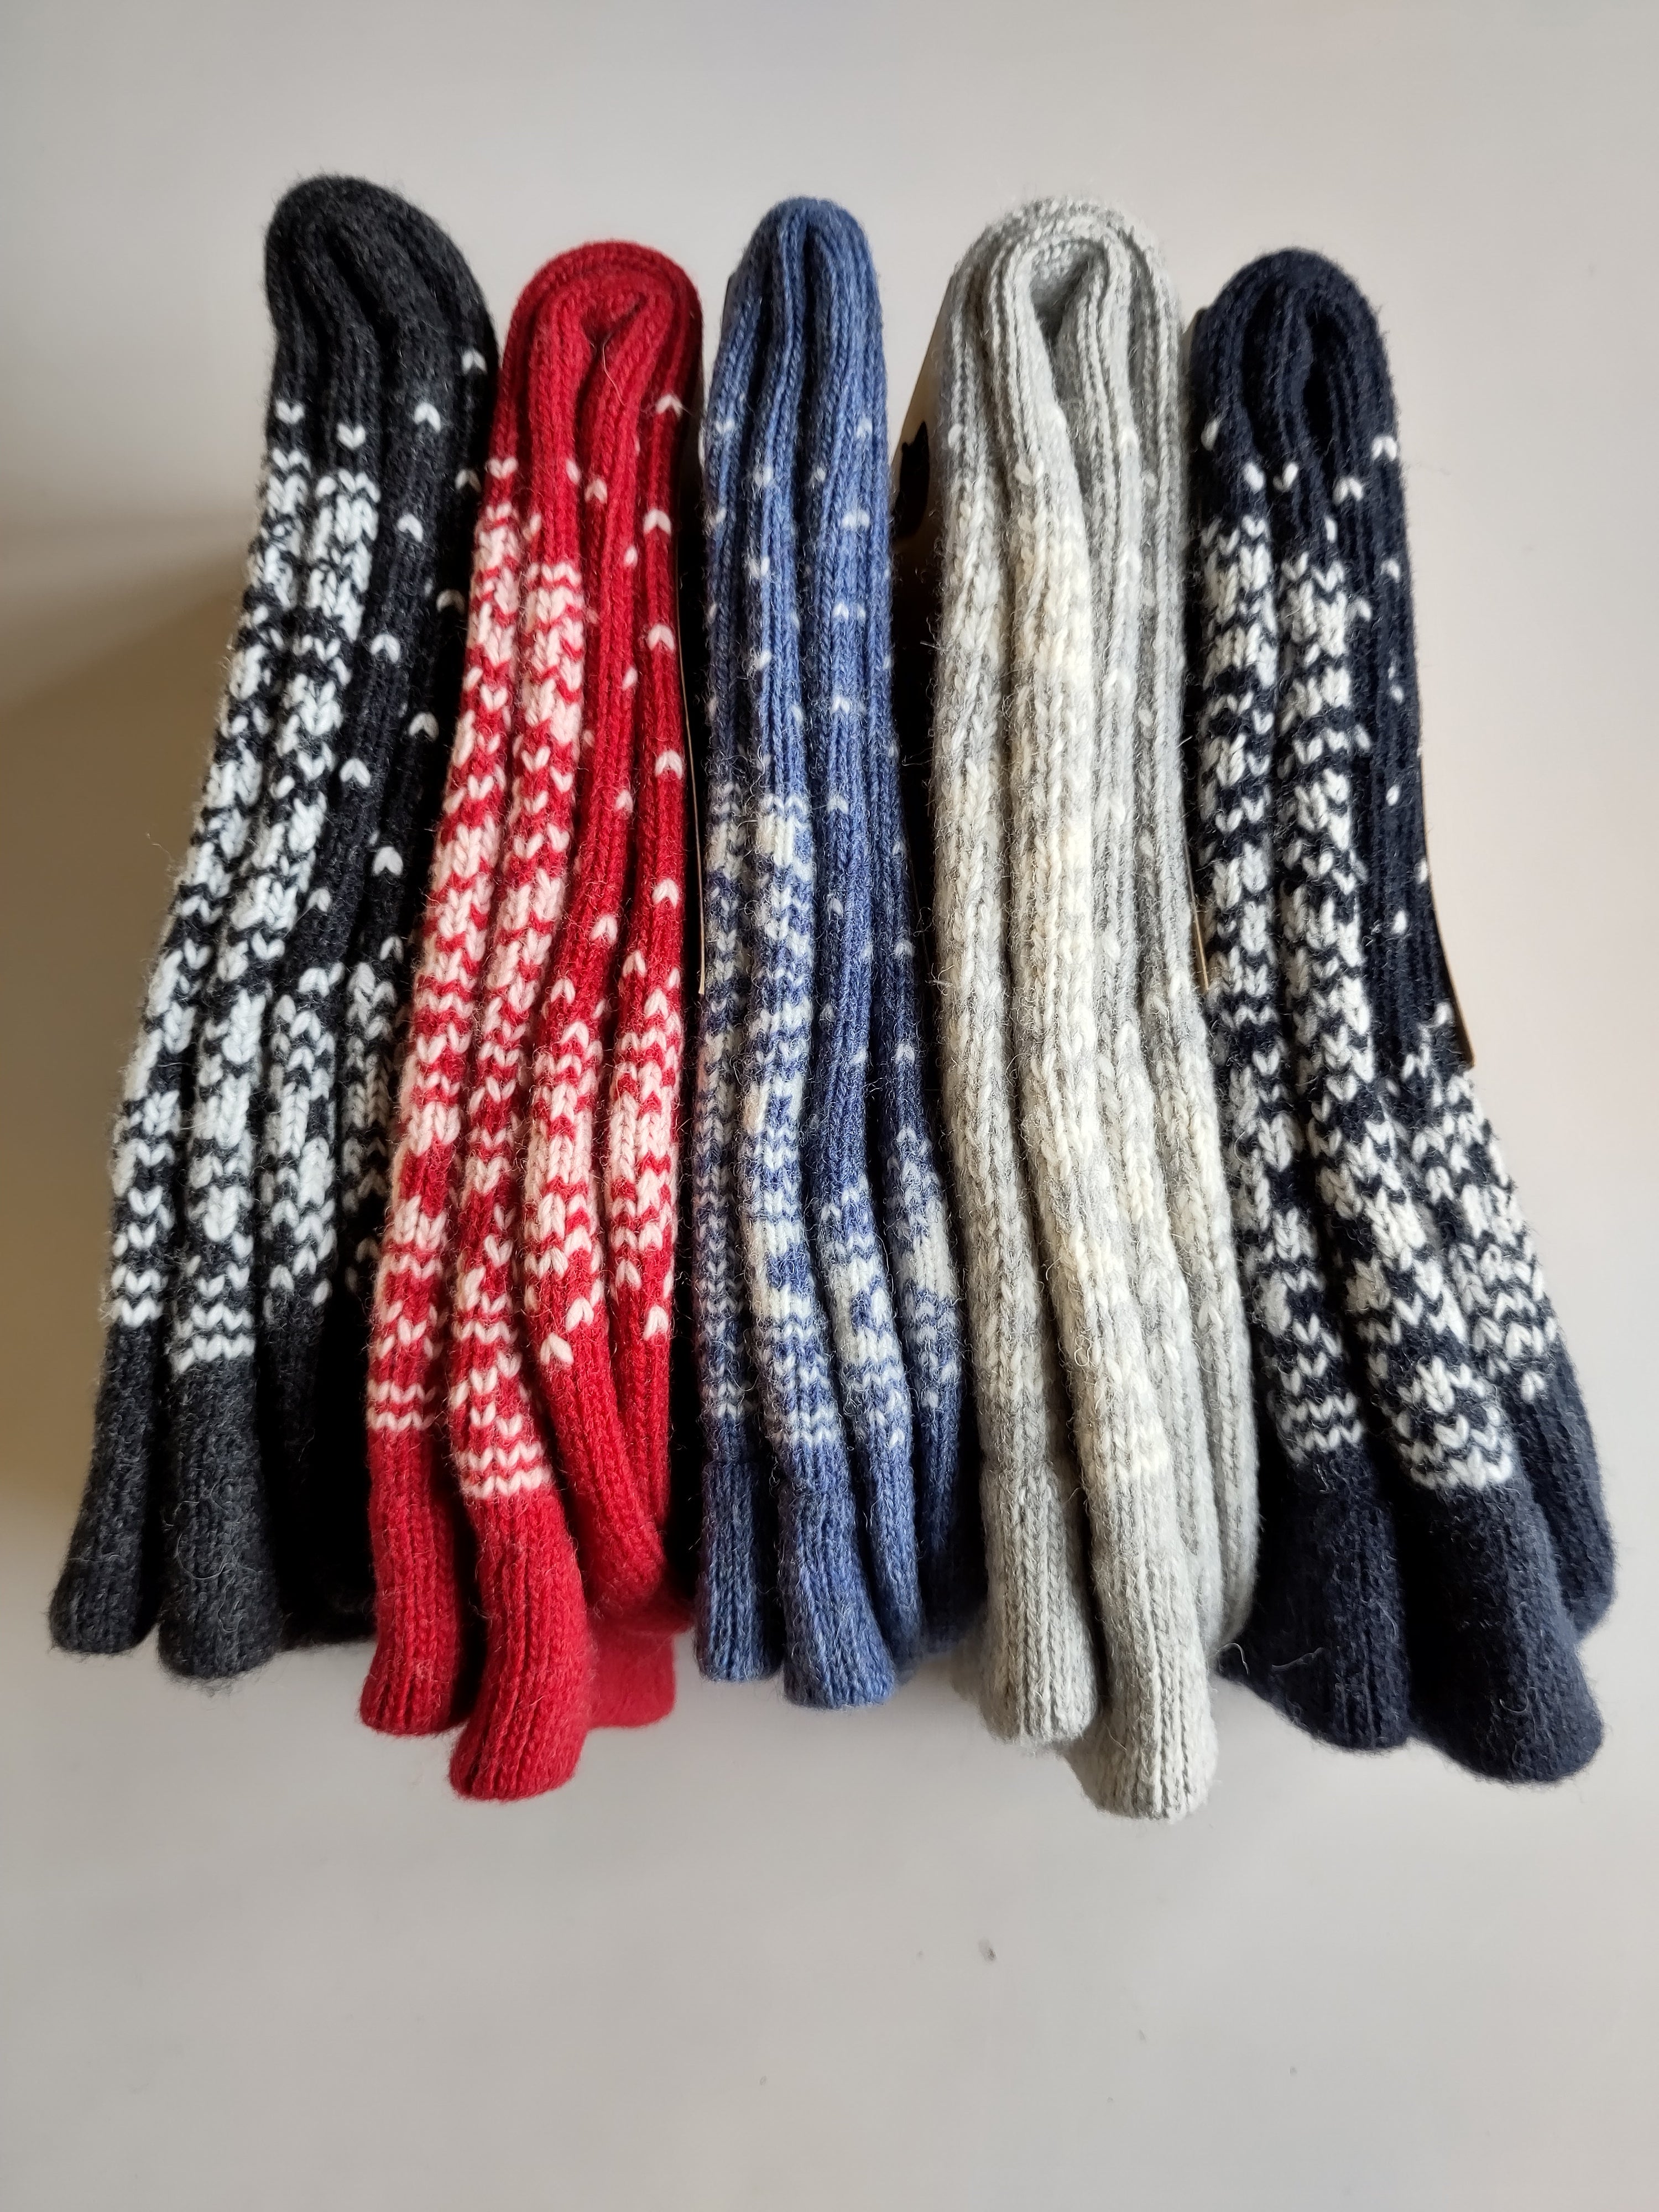 Wollen sokken / Danestay Warm Wool Socks Anthracite/White - Danefae / Dyr